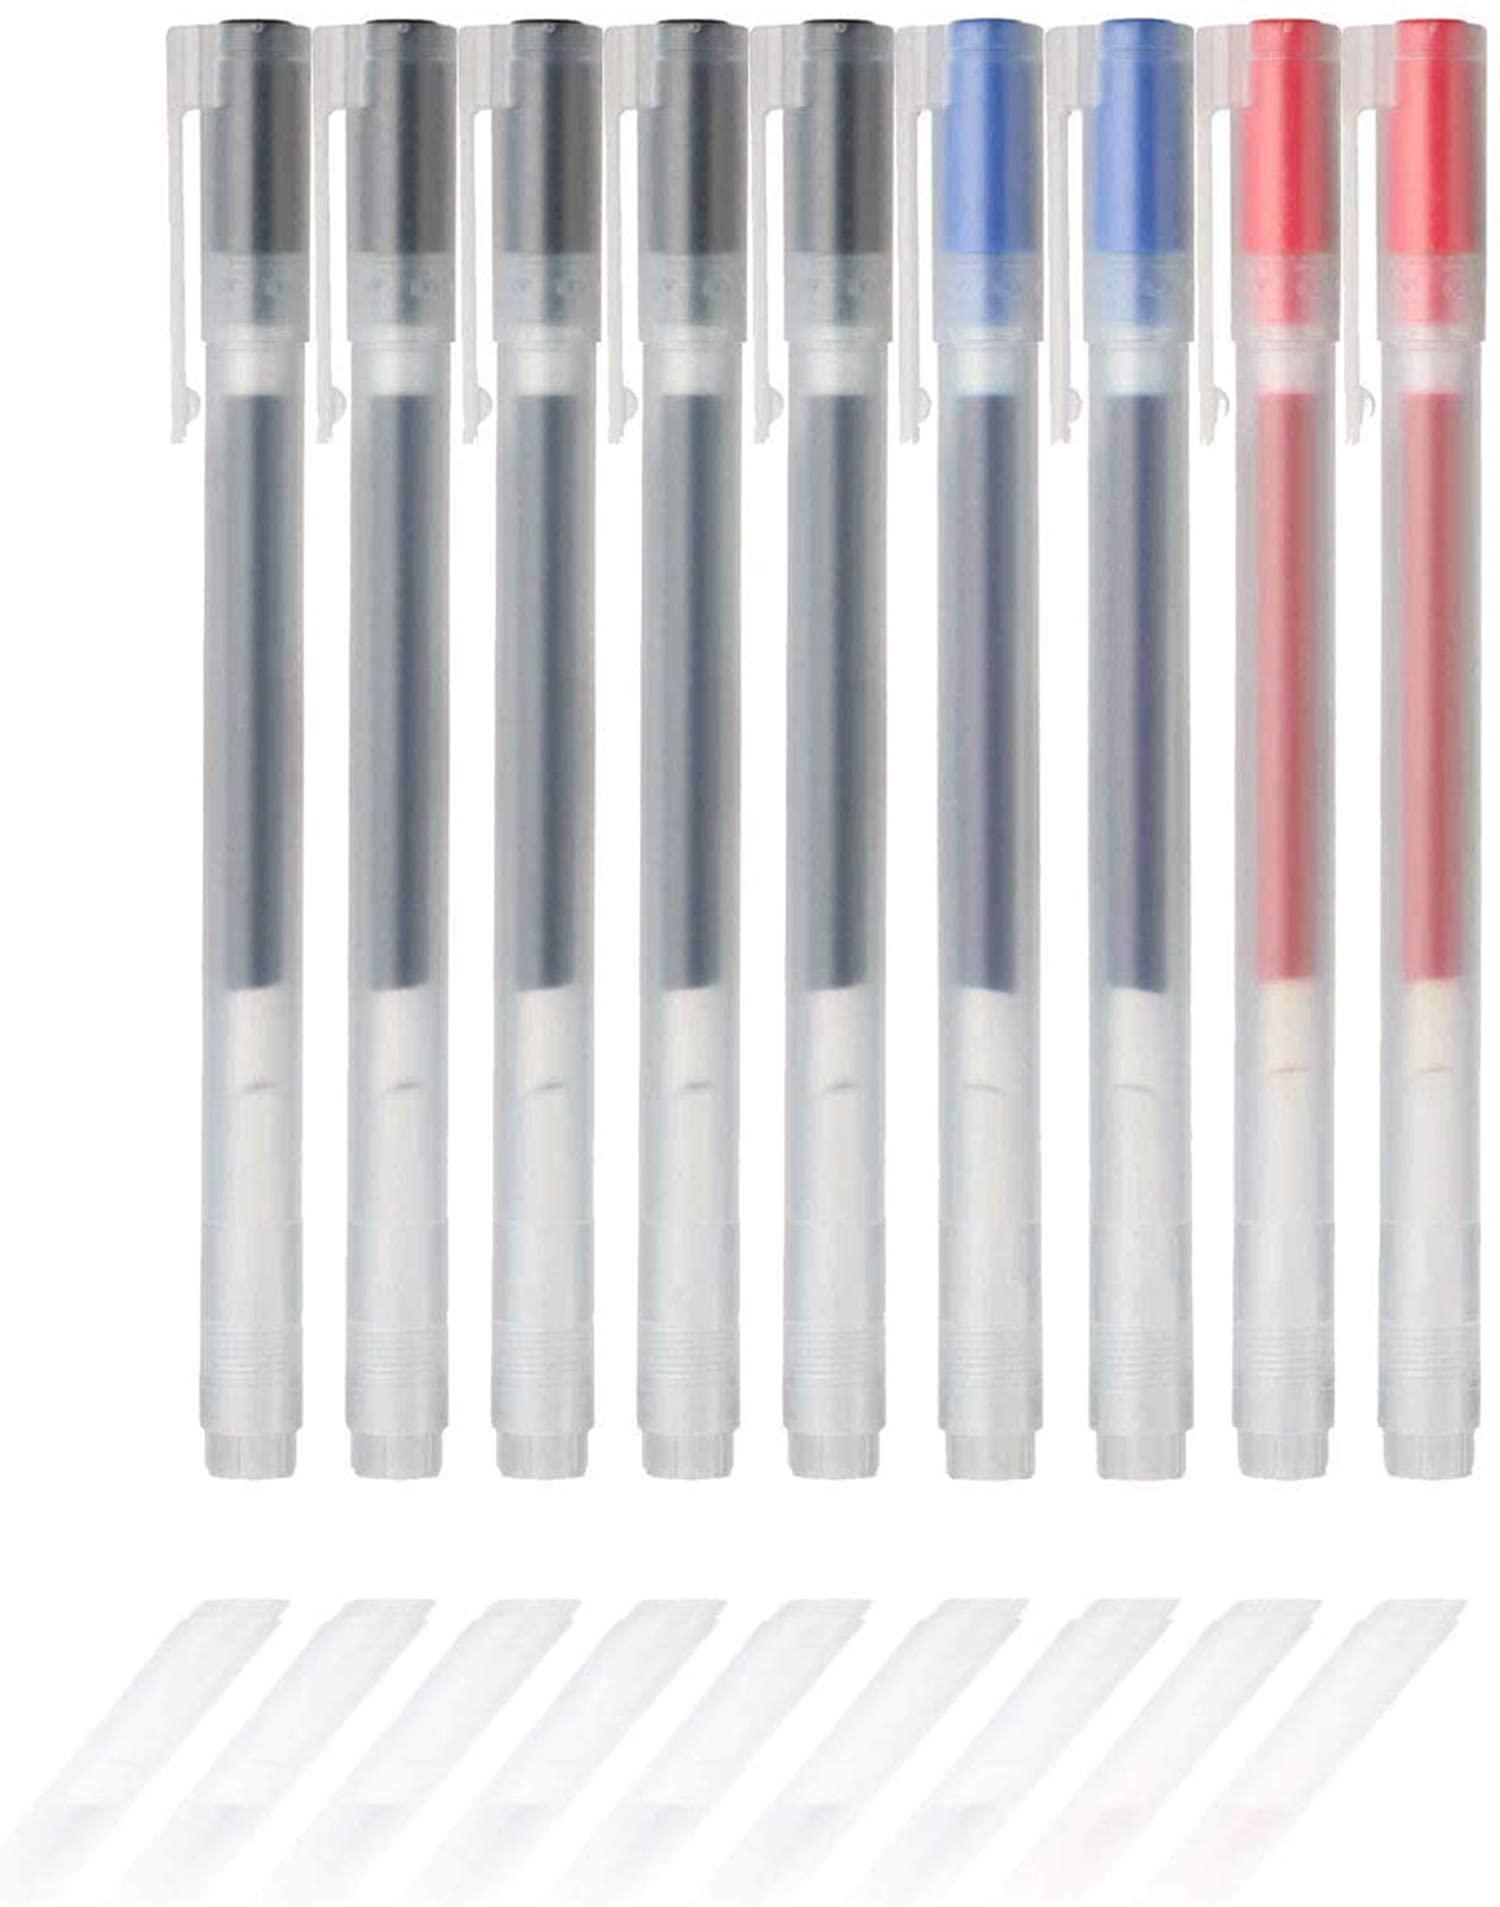 muji gel ink ballpoint pens 0.5mm set of 9 pack (5 black 2 blue 2 red)